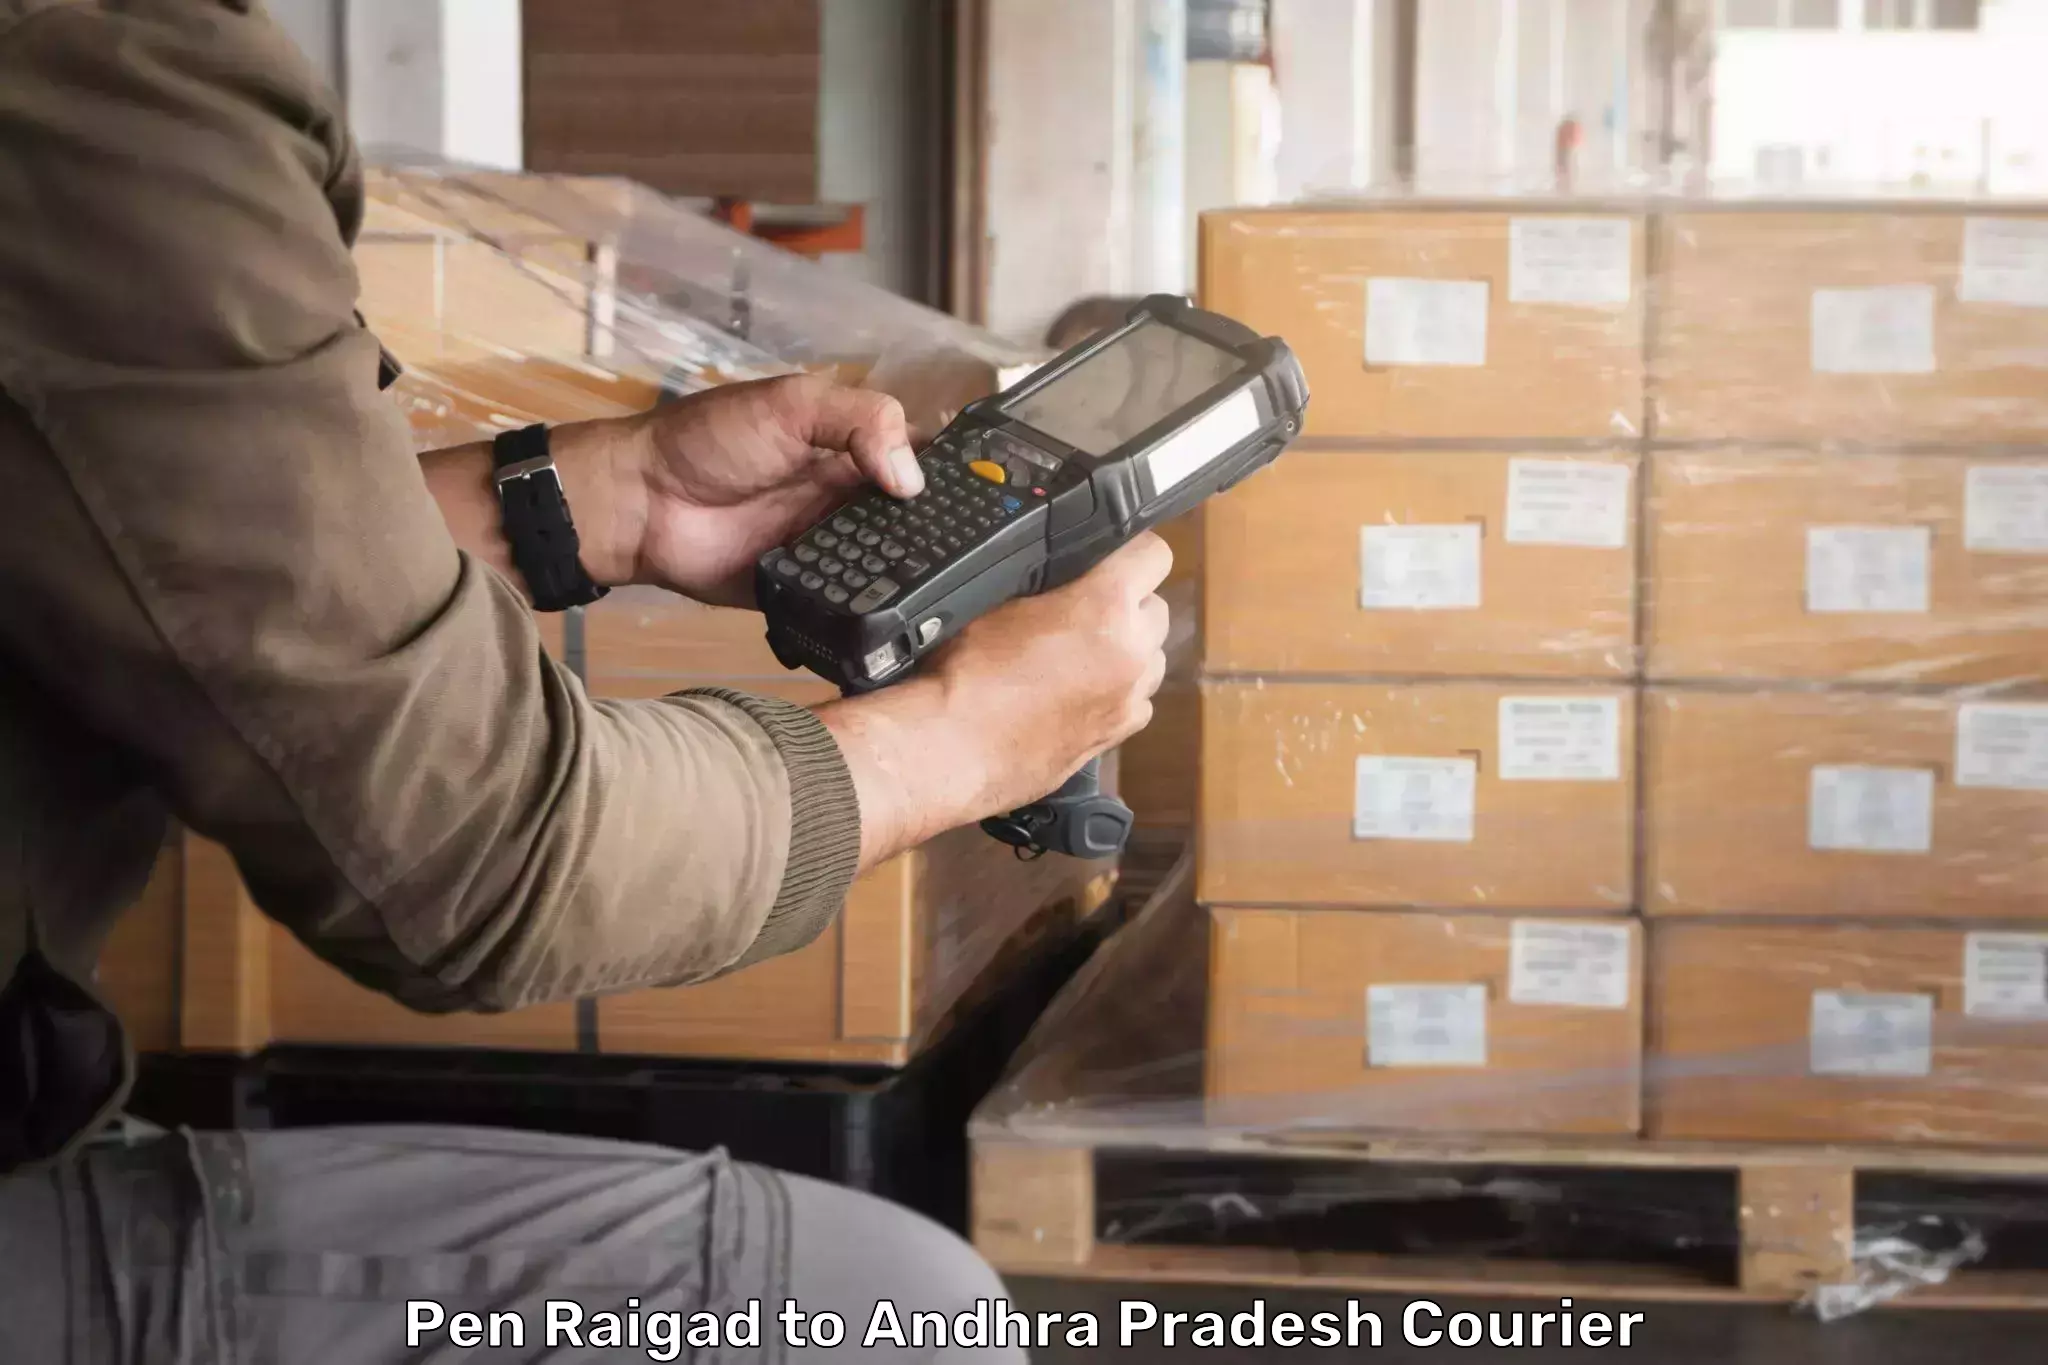 Courier service efficiency Pen Raigad to Madanapalle